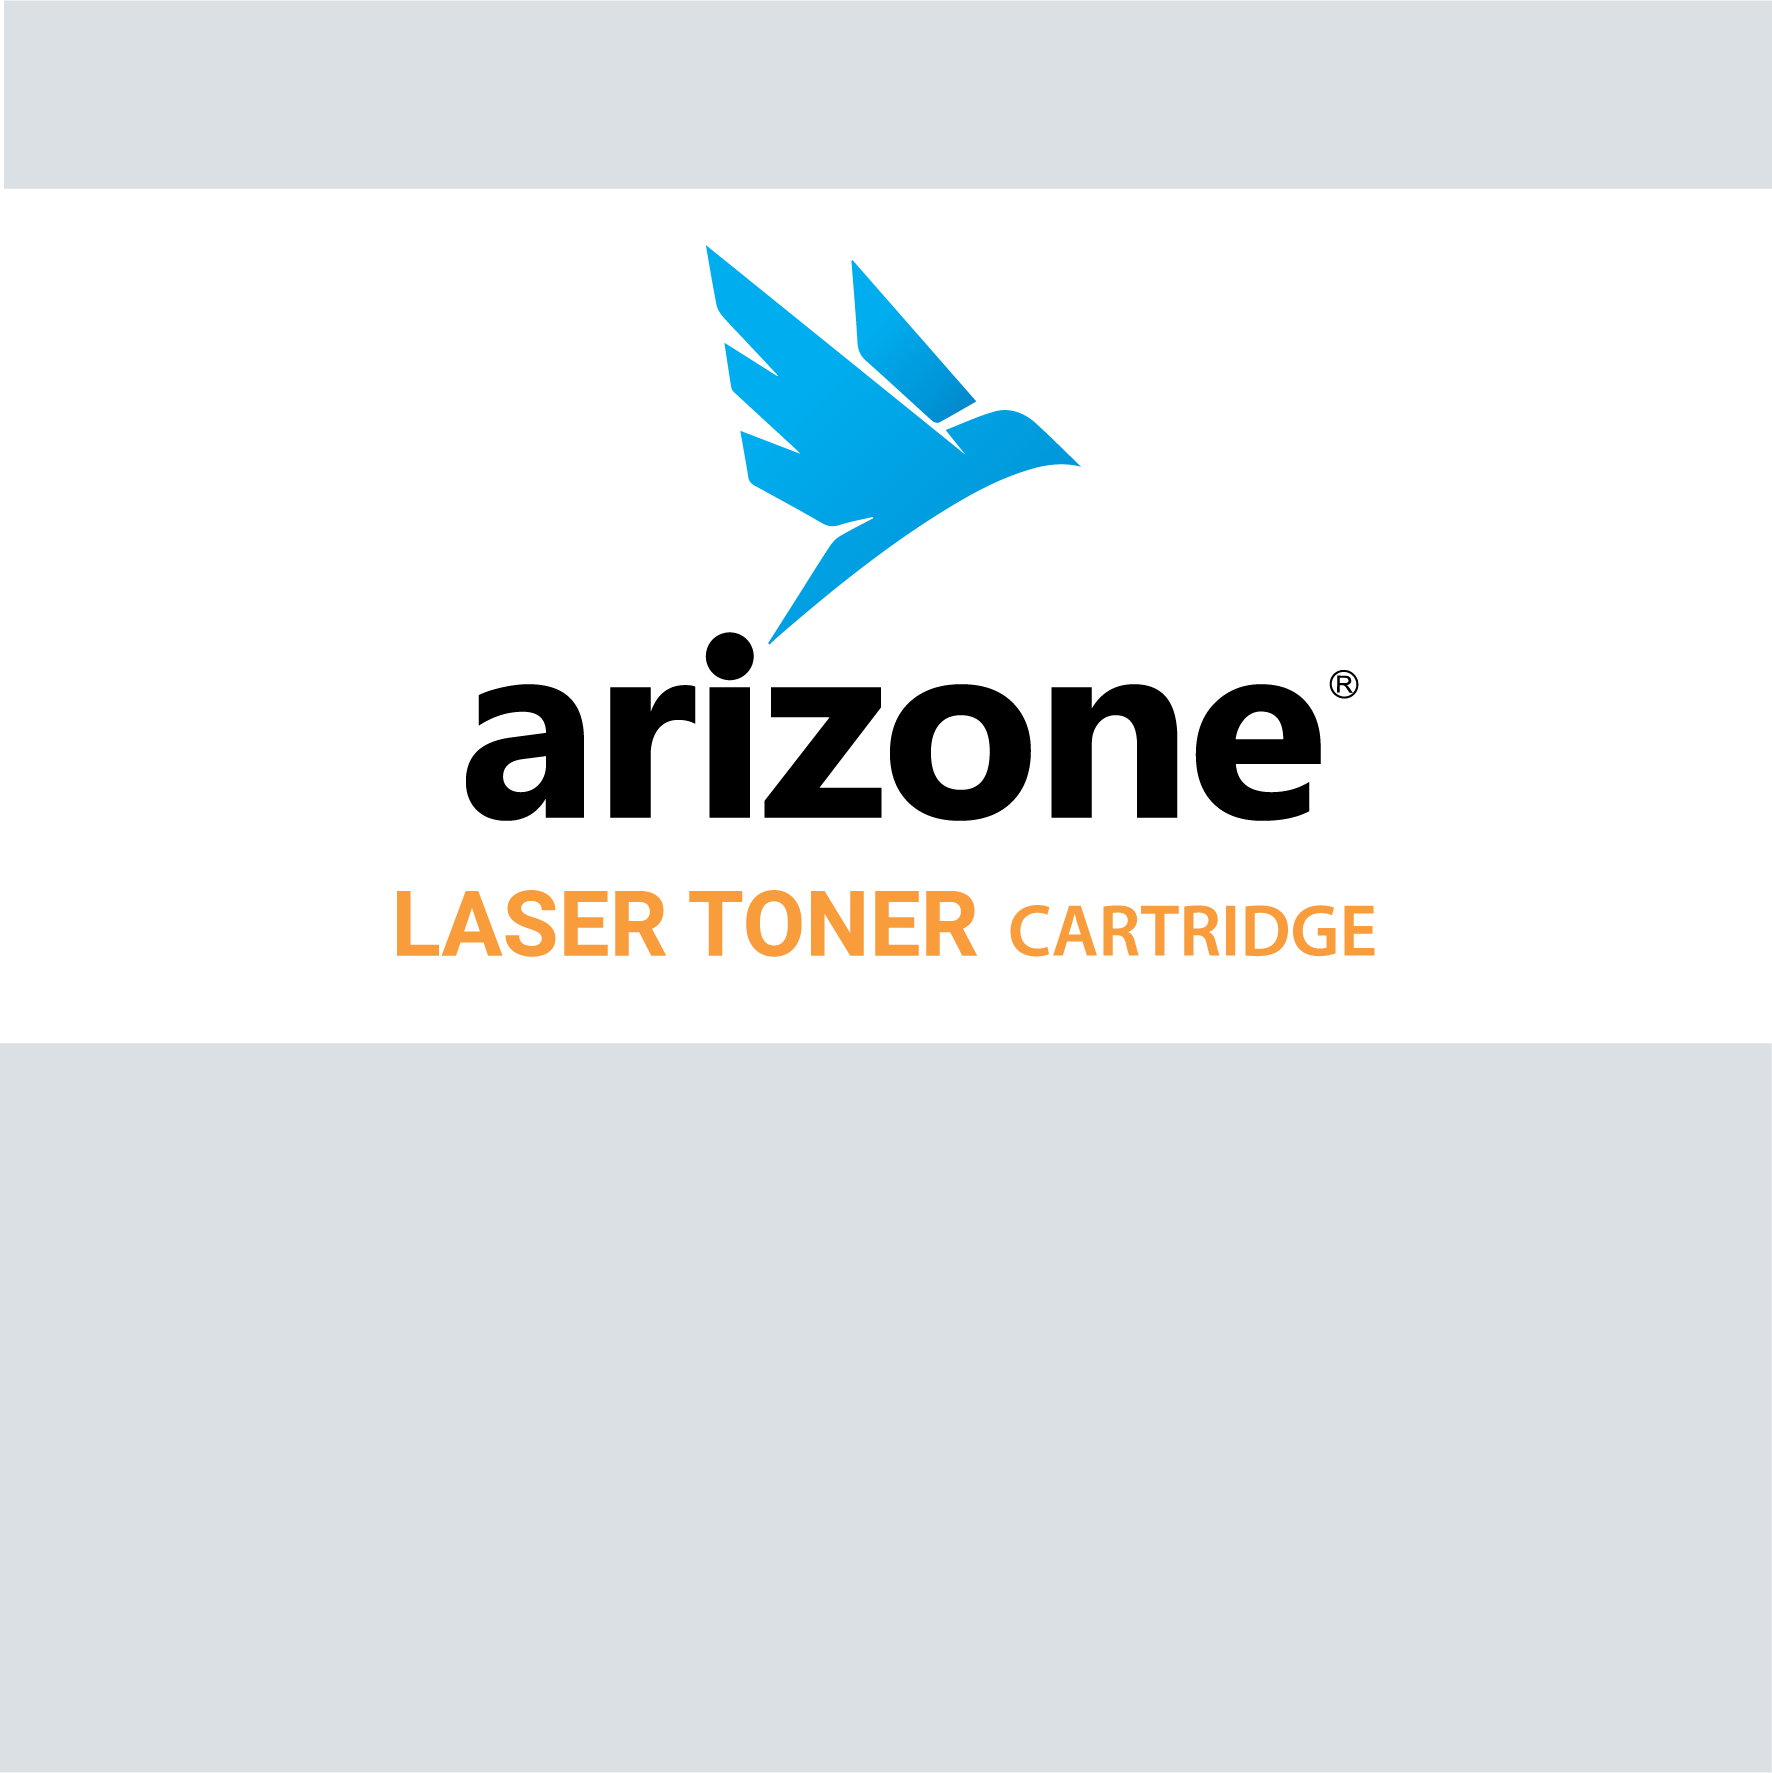 Arizone Toner Cartridge K505L CLT-K505L Black